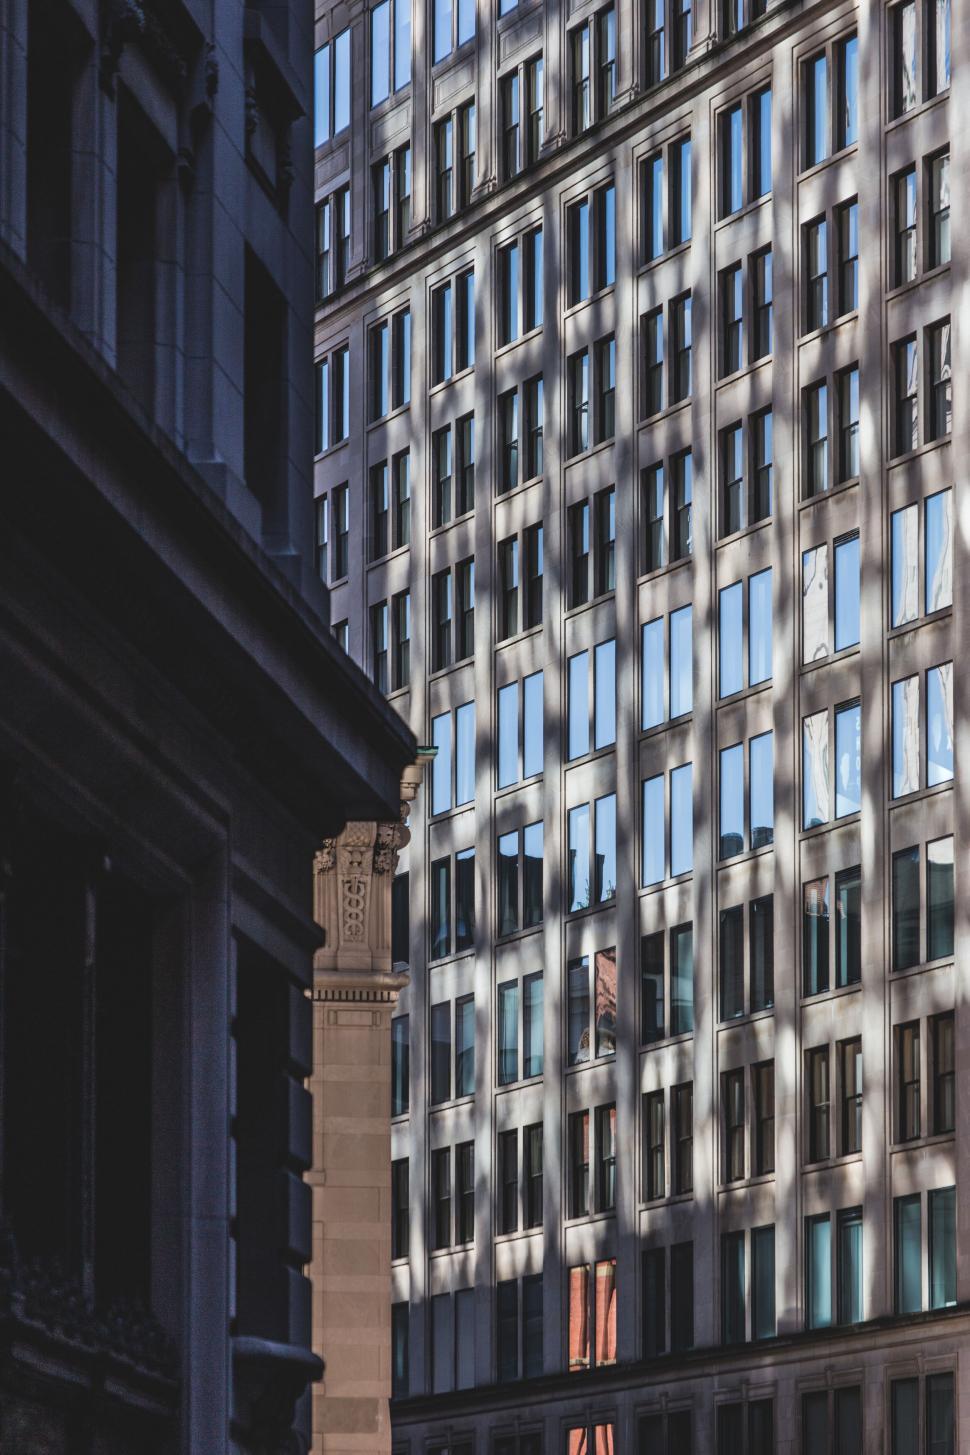 Free Image of Reflective windows on urban architecture 